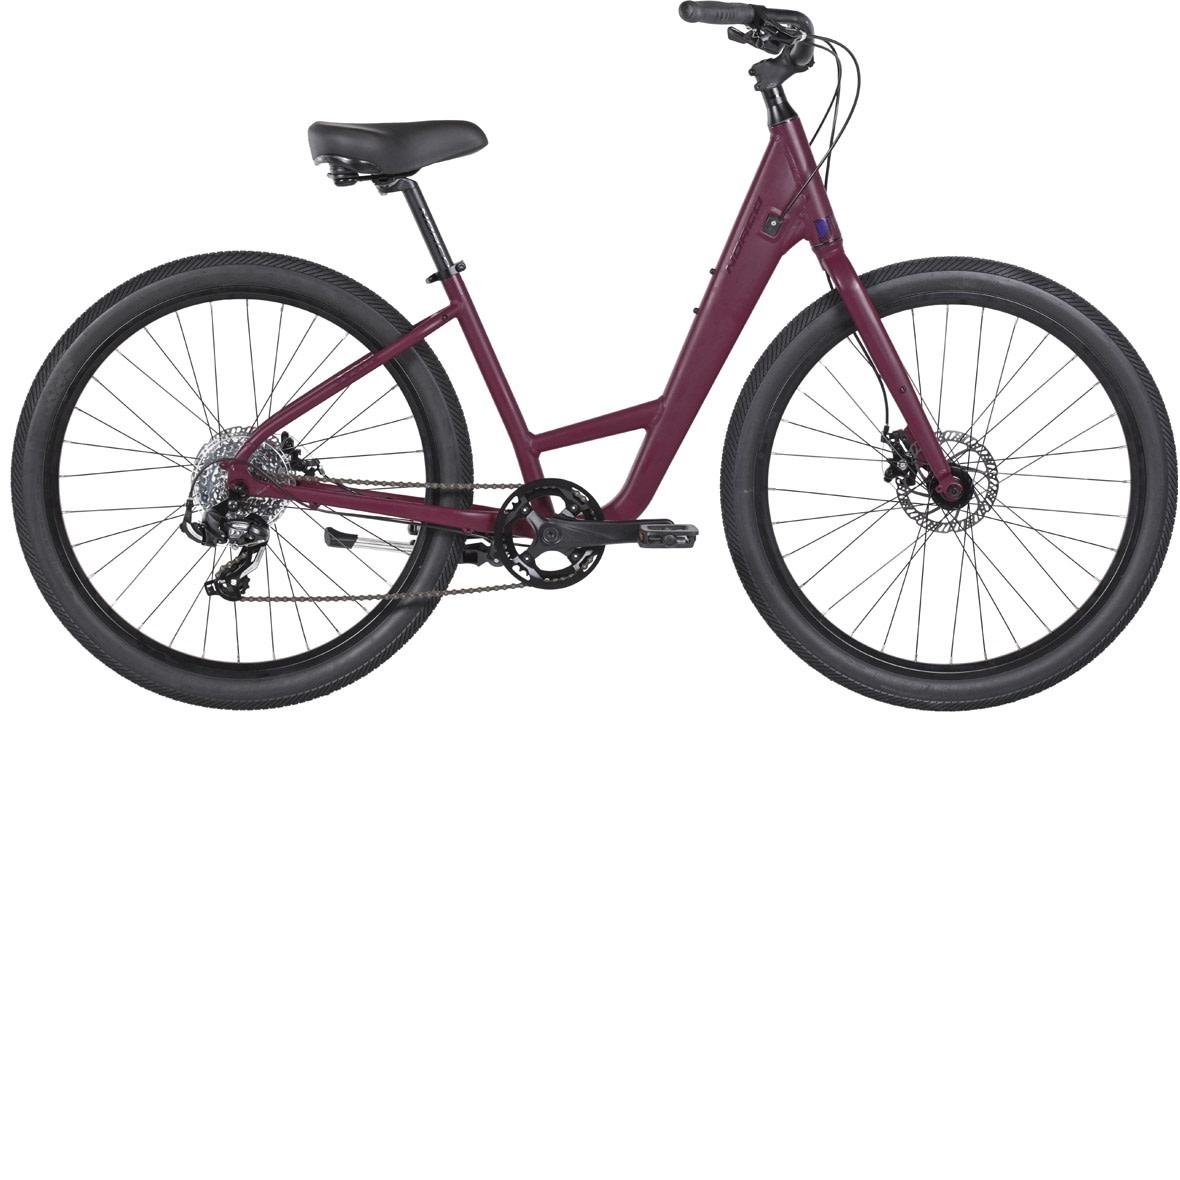 pink hybrid bike